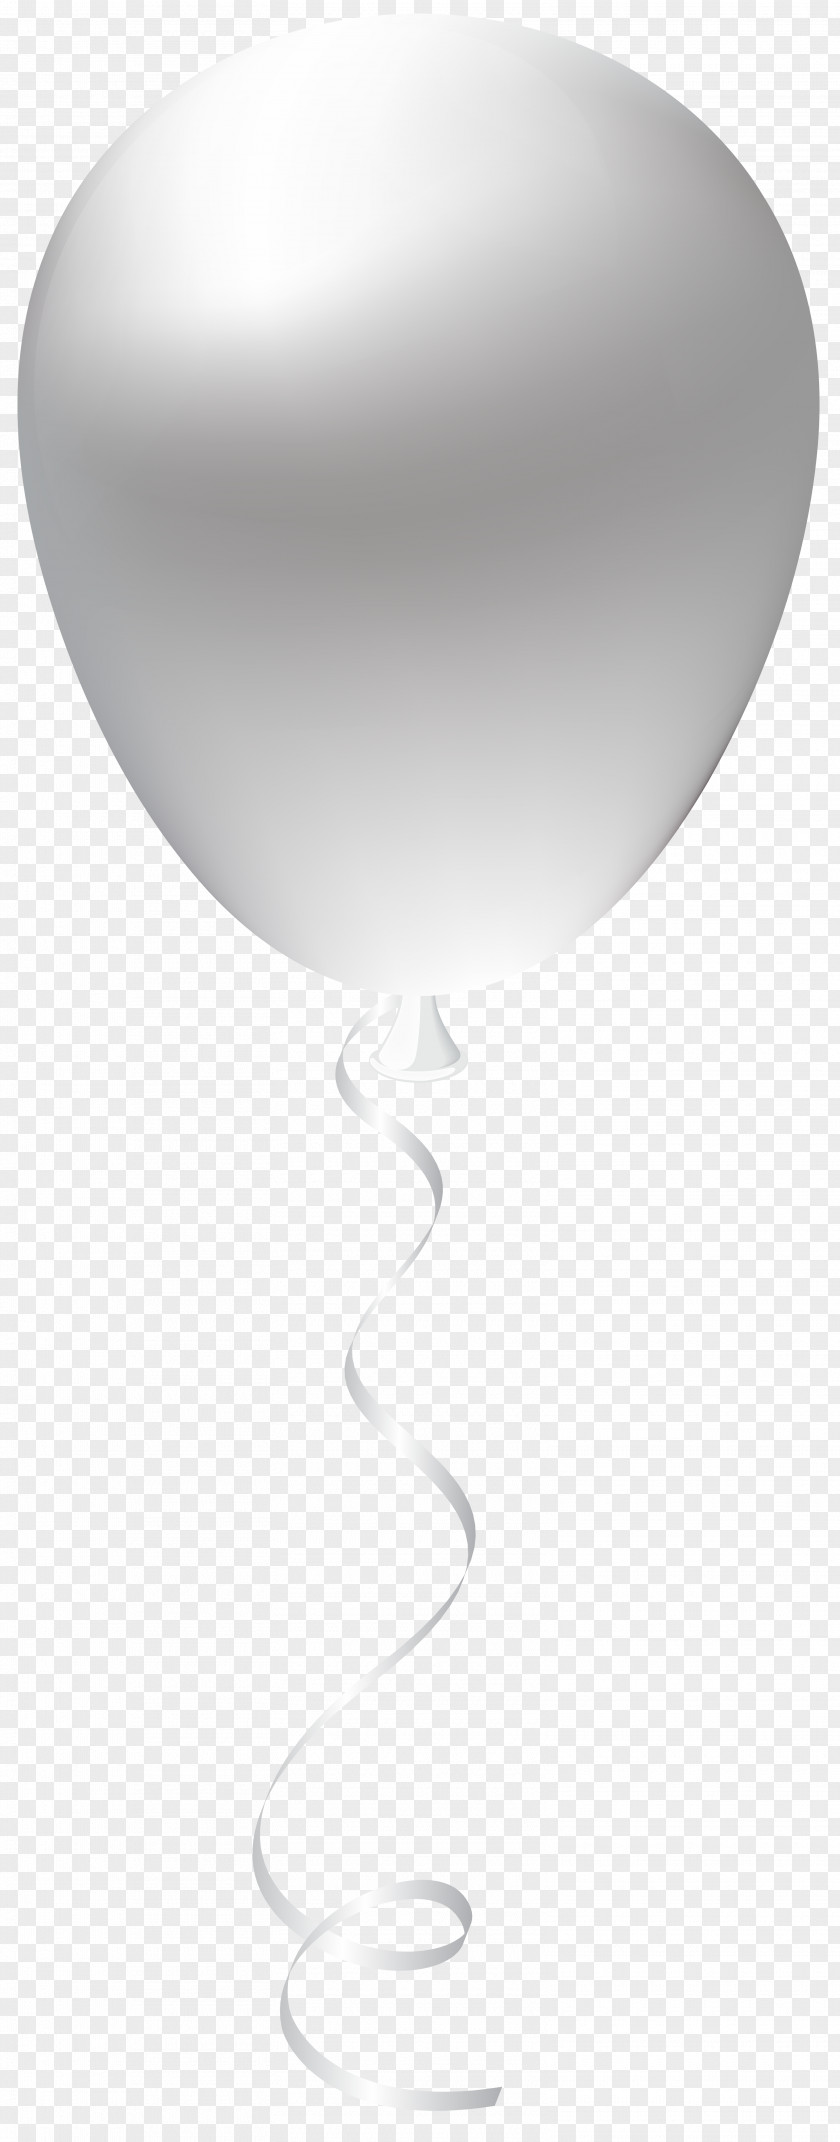 Balloon White Balloons * Image Clip Art PNG